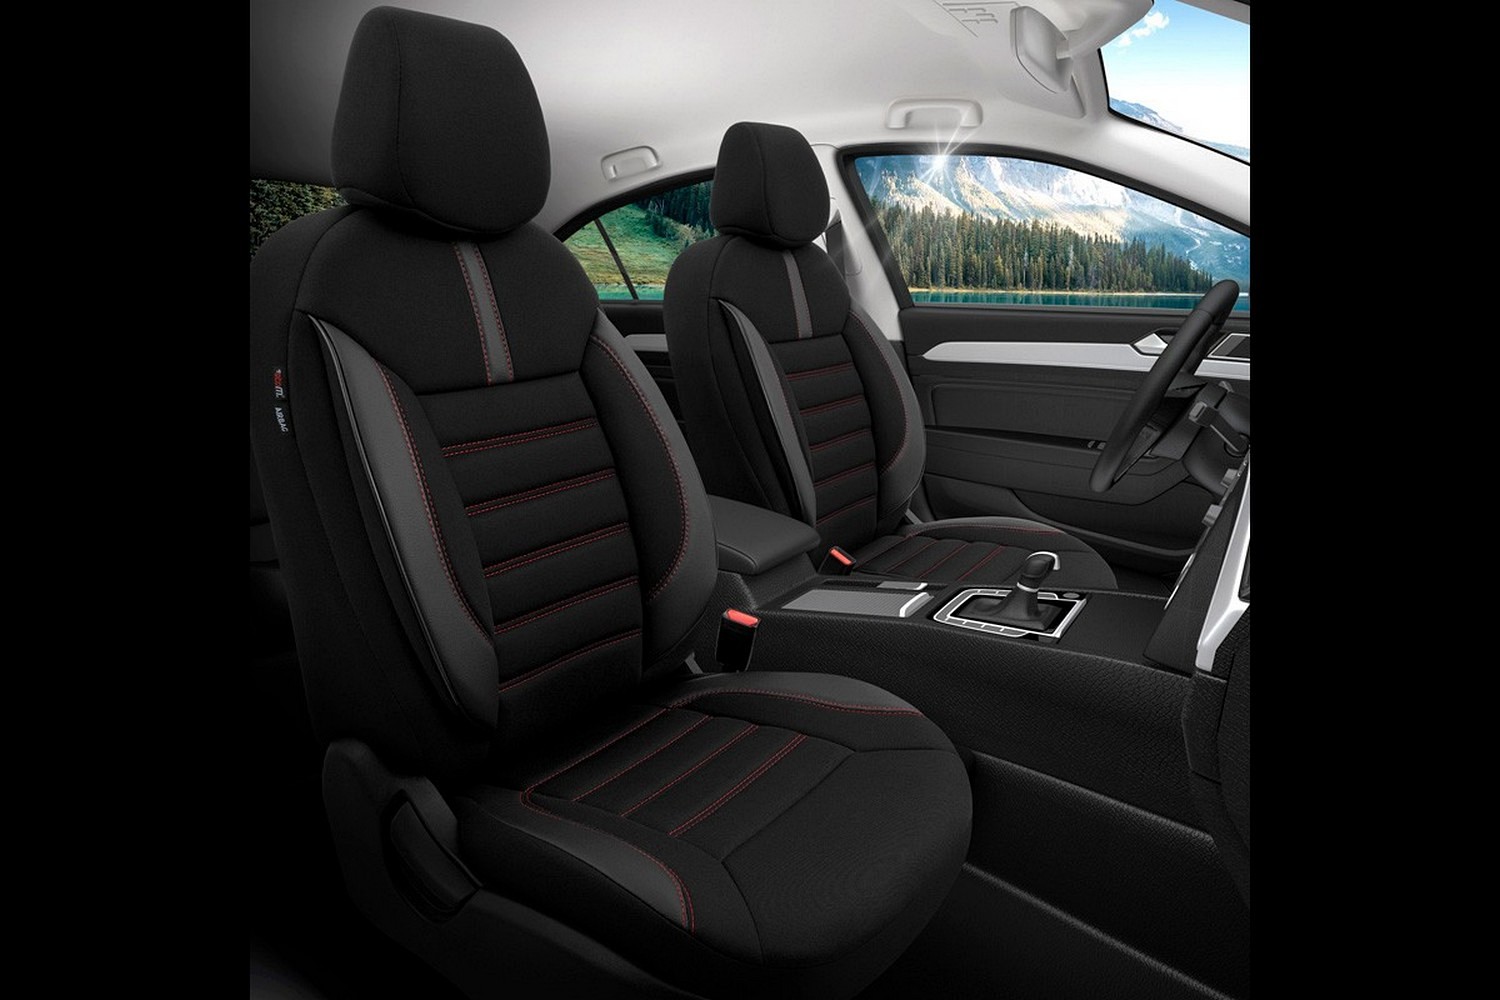 Auto Sitzbezüge Universal Polyester rot-schwarz (Komplett-Set) - CRAFTMAX